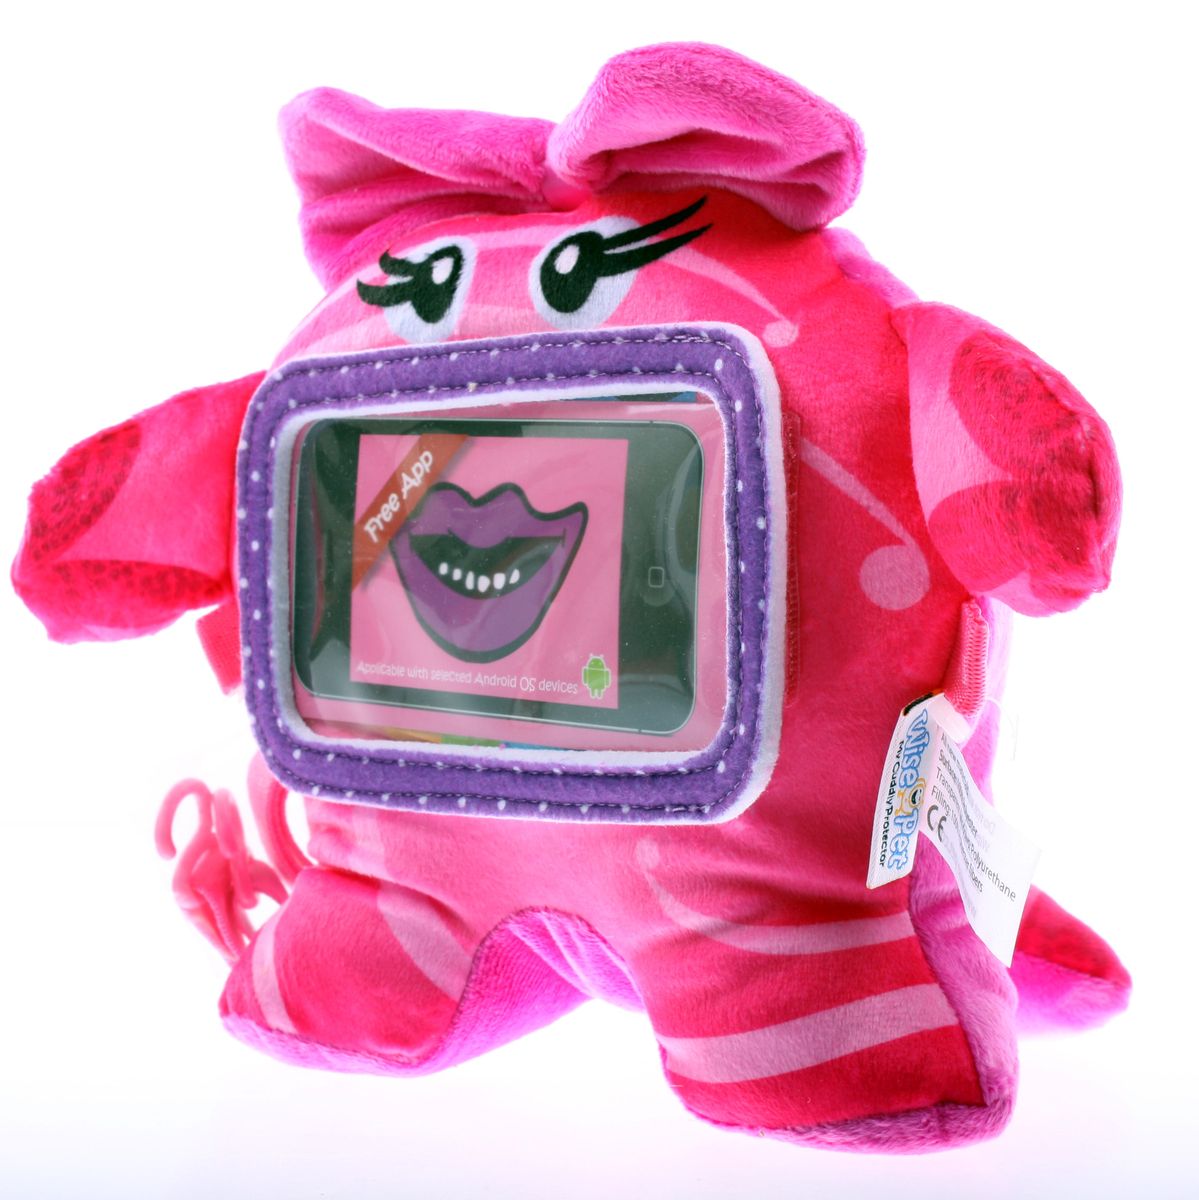 Wise Pet Мягкая игрушка Pinky с прозрачным карманом для смартфона